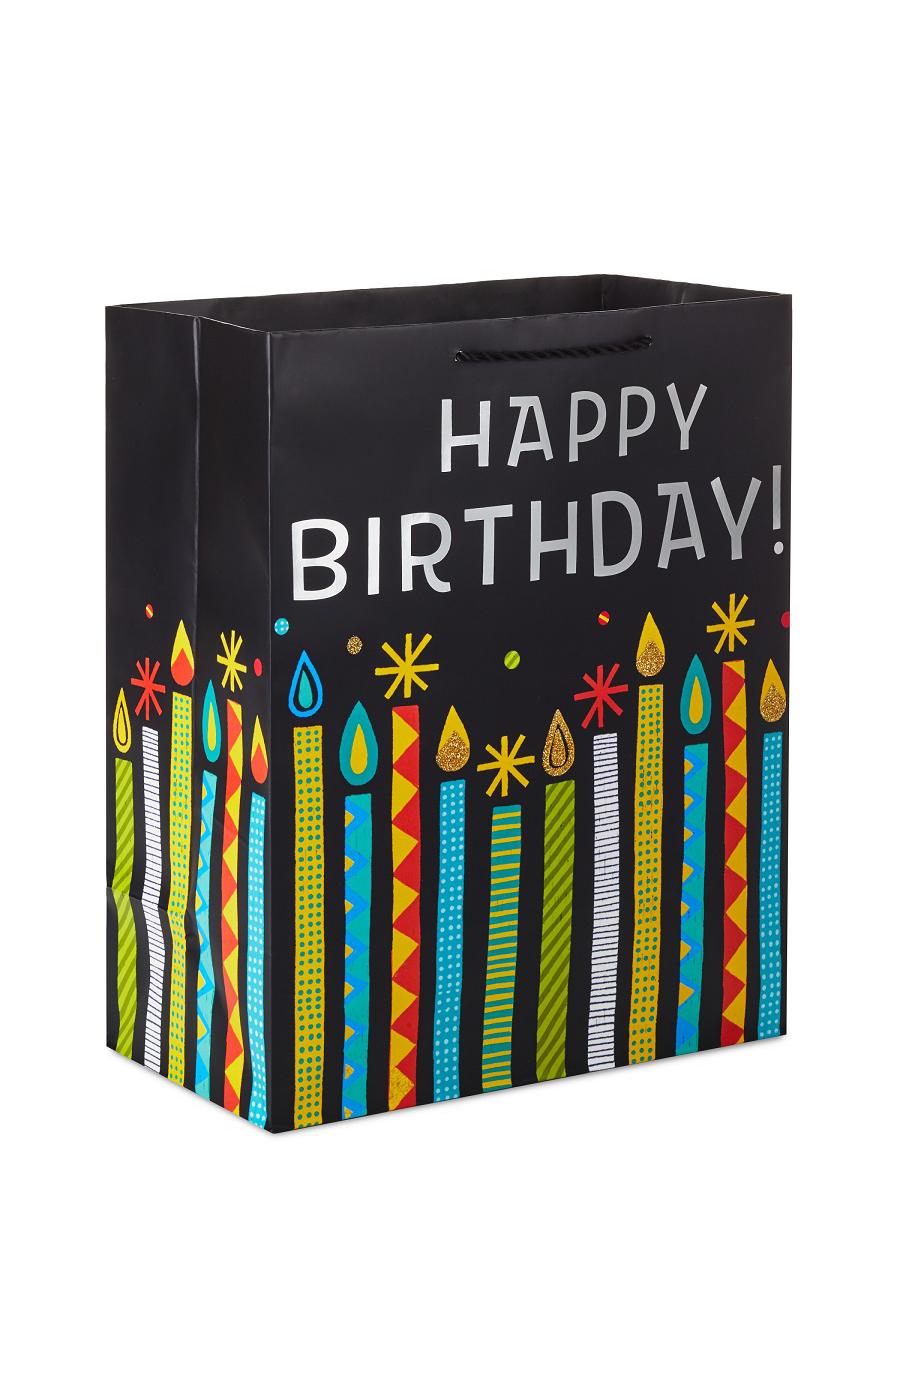 Hallmark Happy Birthday Candles Gift Bag - Black; image 1 of 5